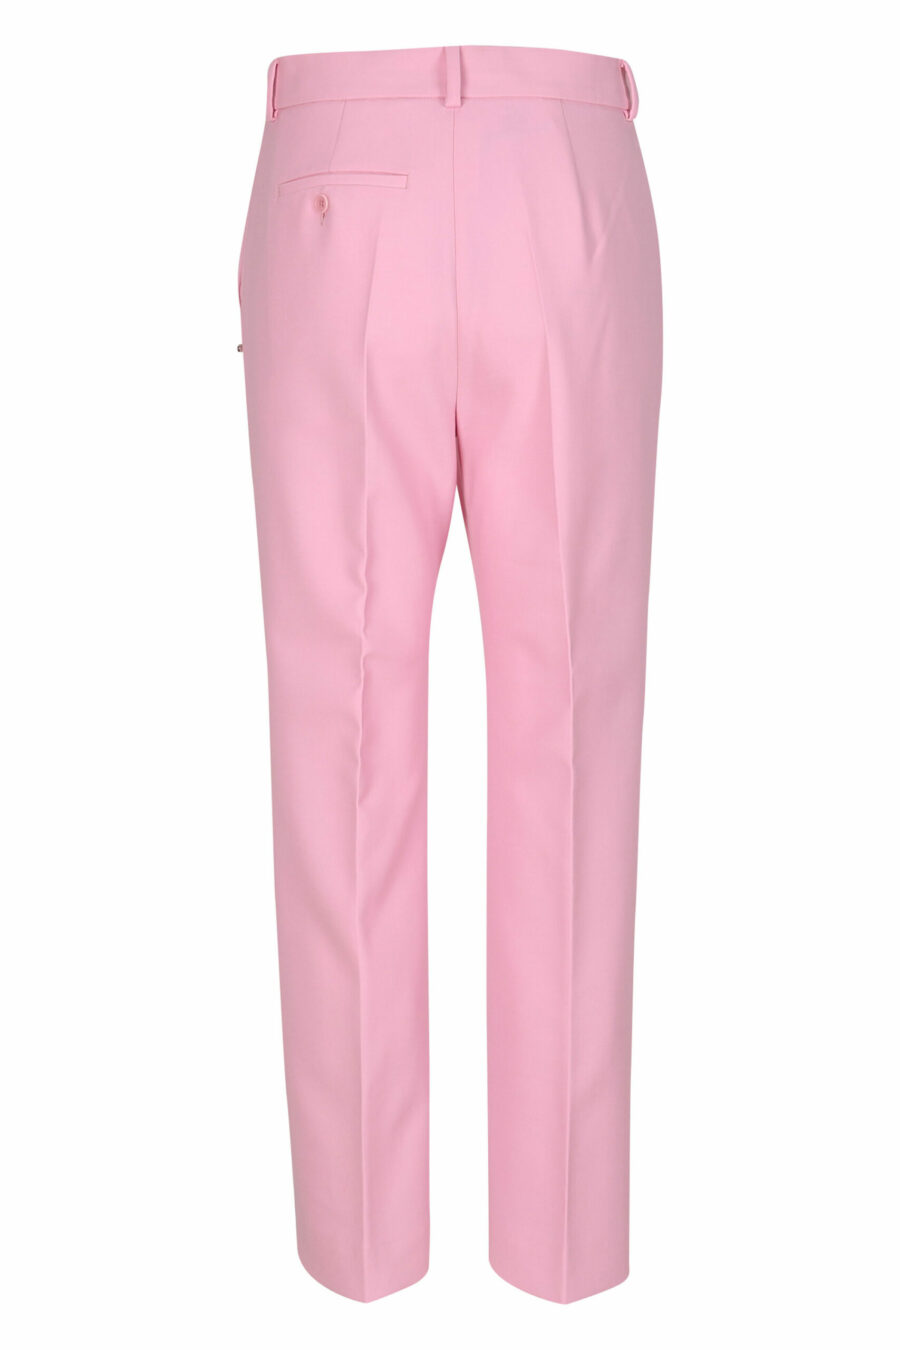 Pantalón rosa ancho - 21310741060053 2 scaled